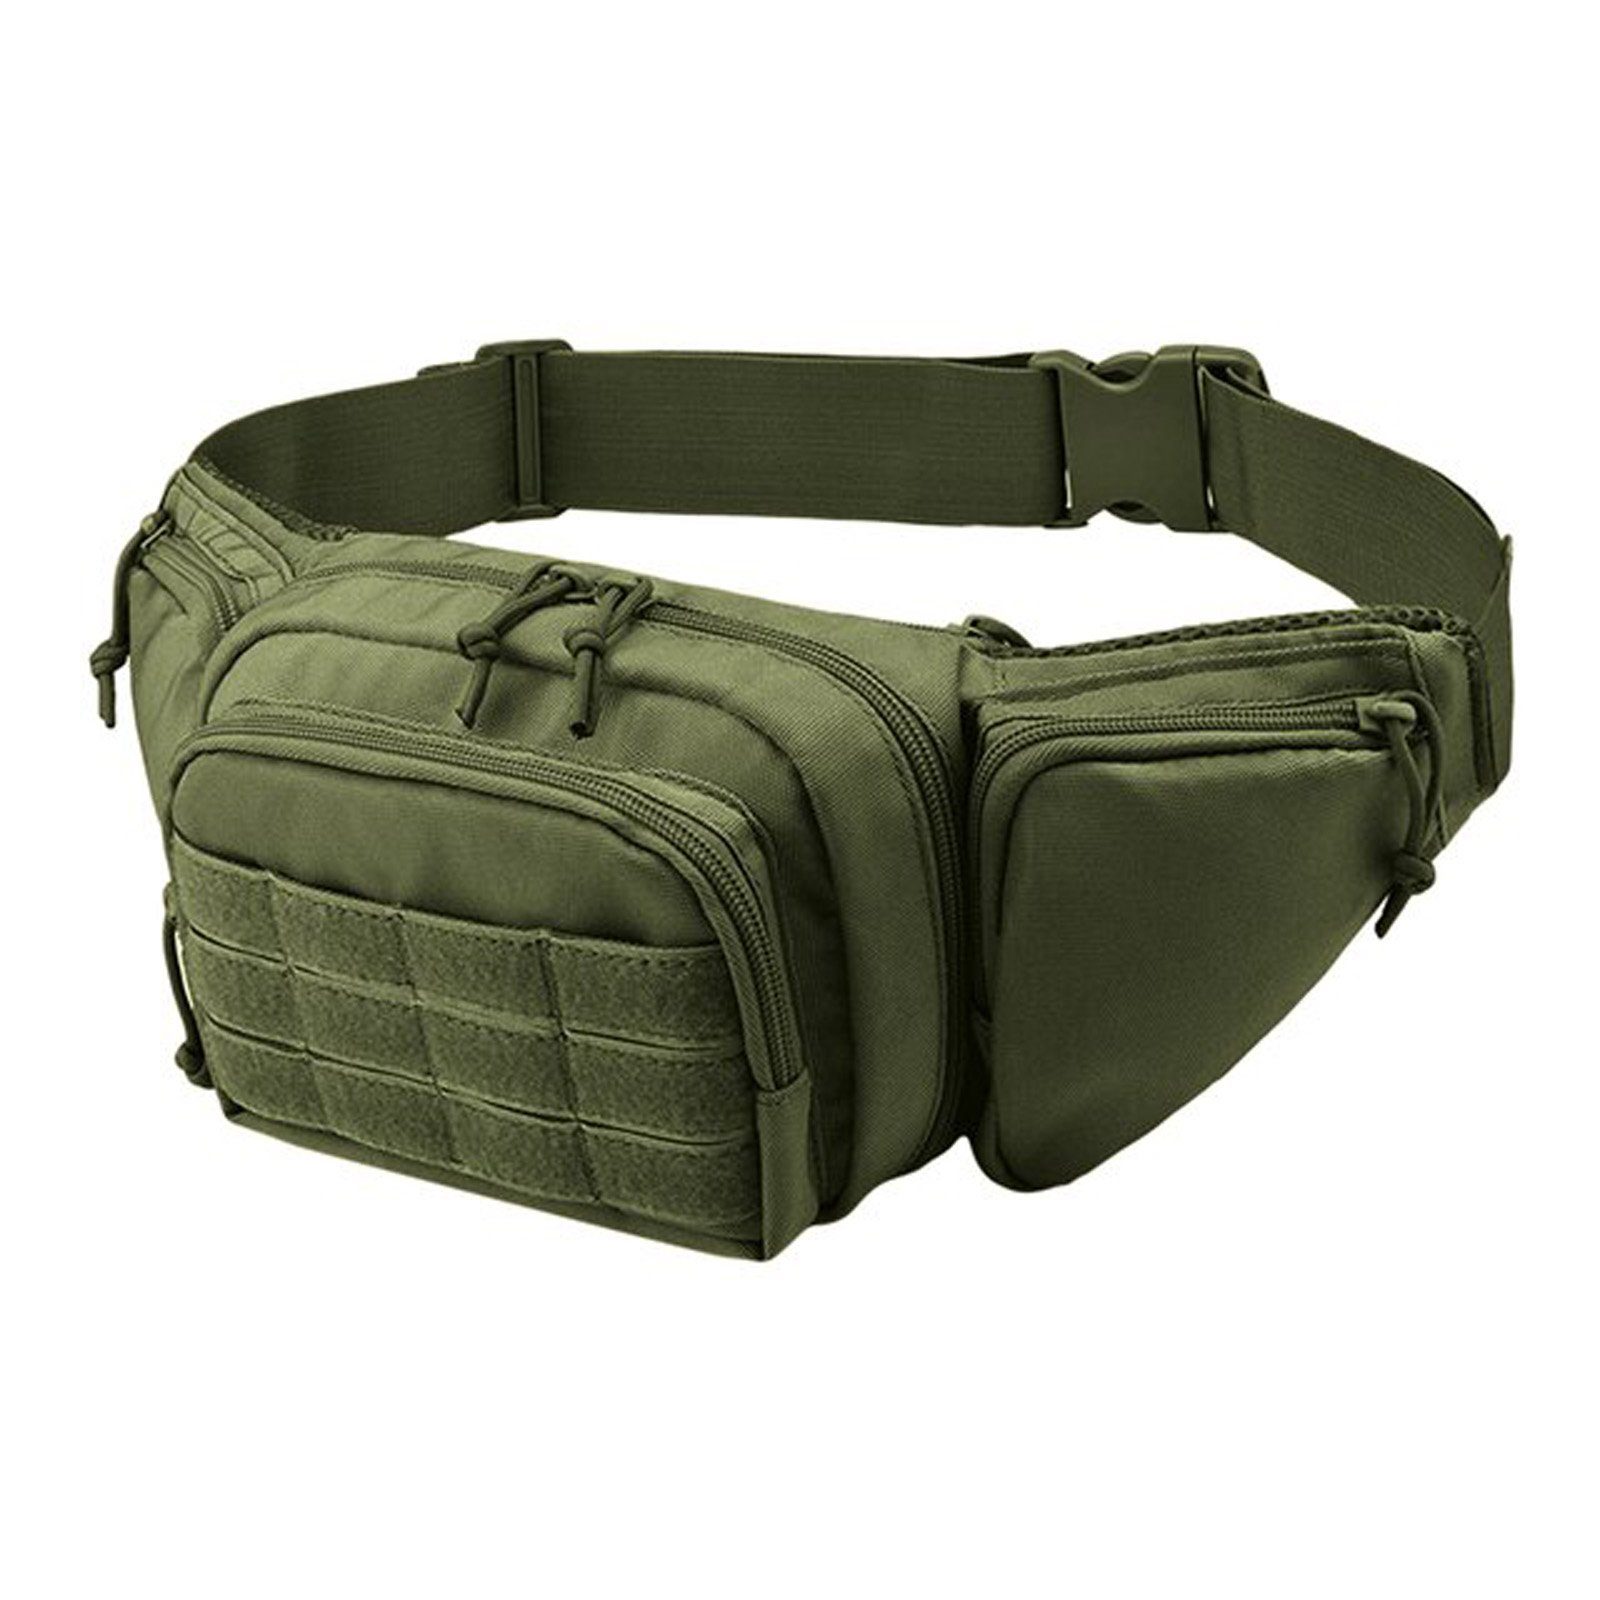 Bauchtasche Gürteltasche Sporttasche Hüfttasche Bag Outdoor Tactical Geldtasche 